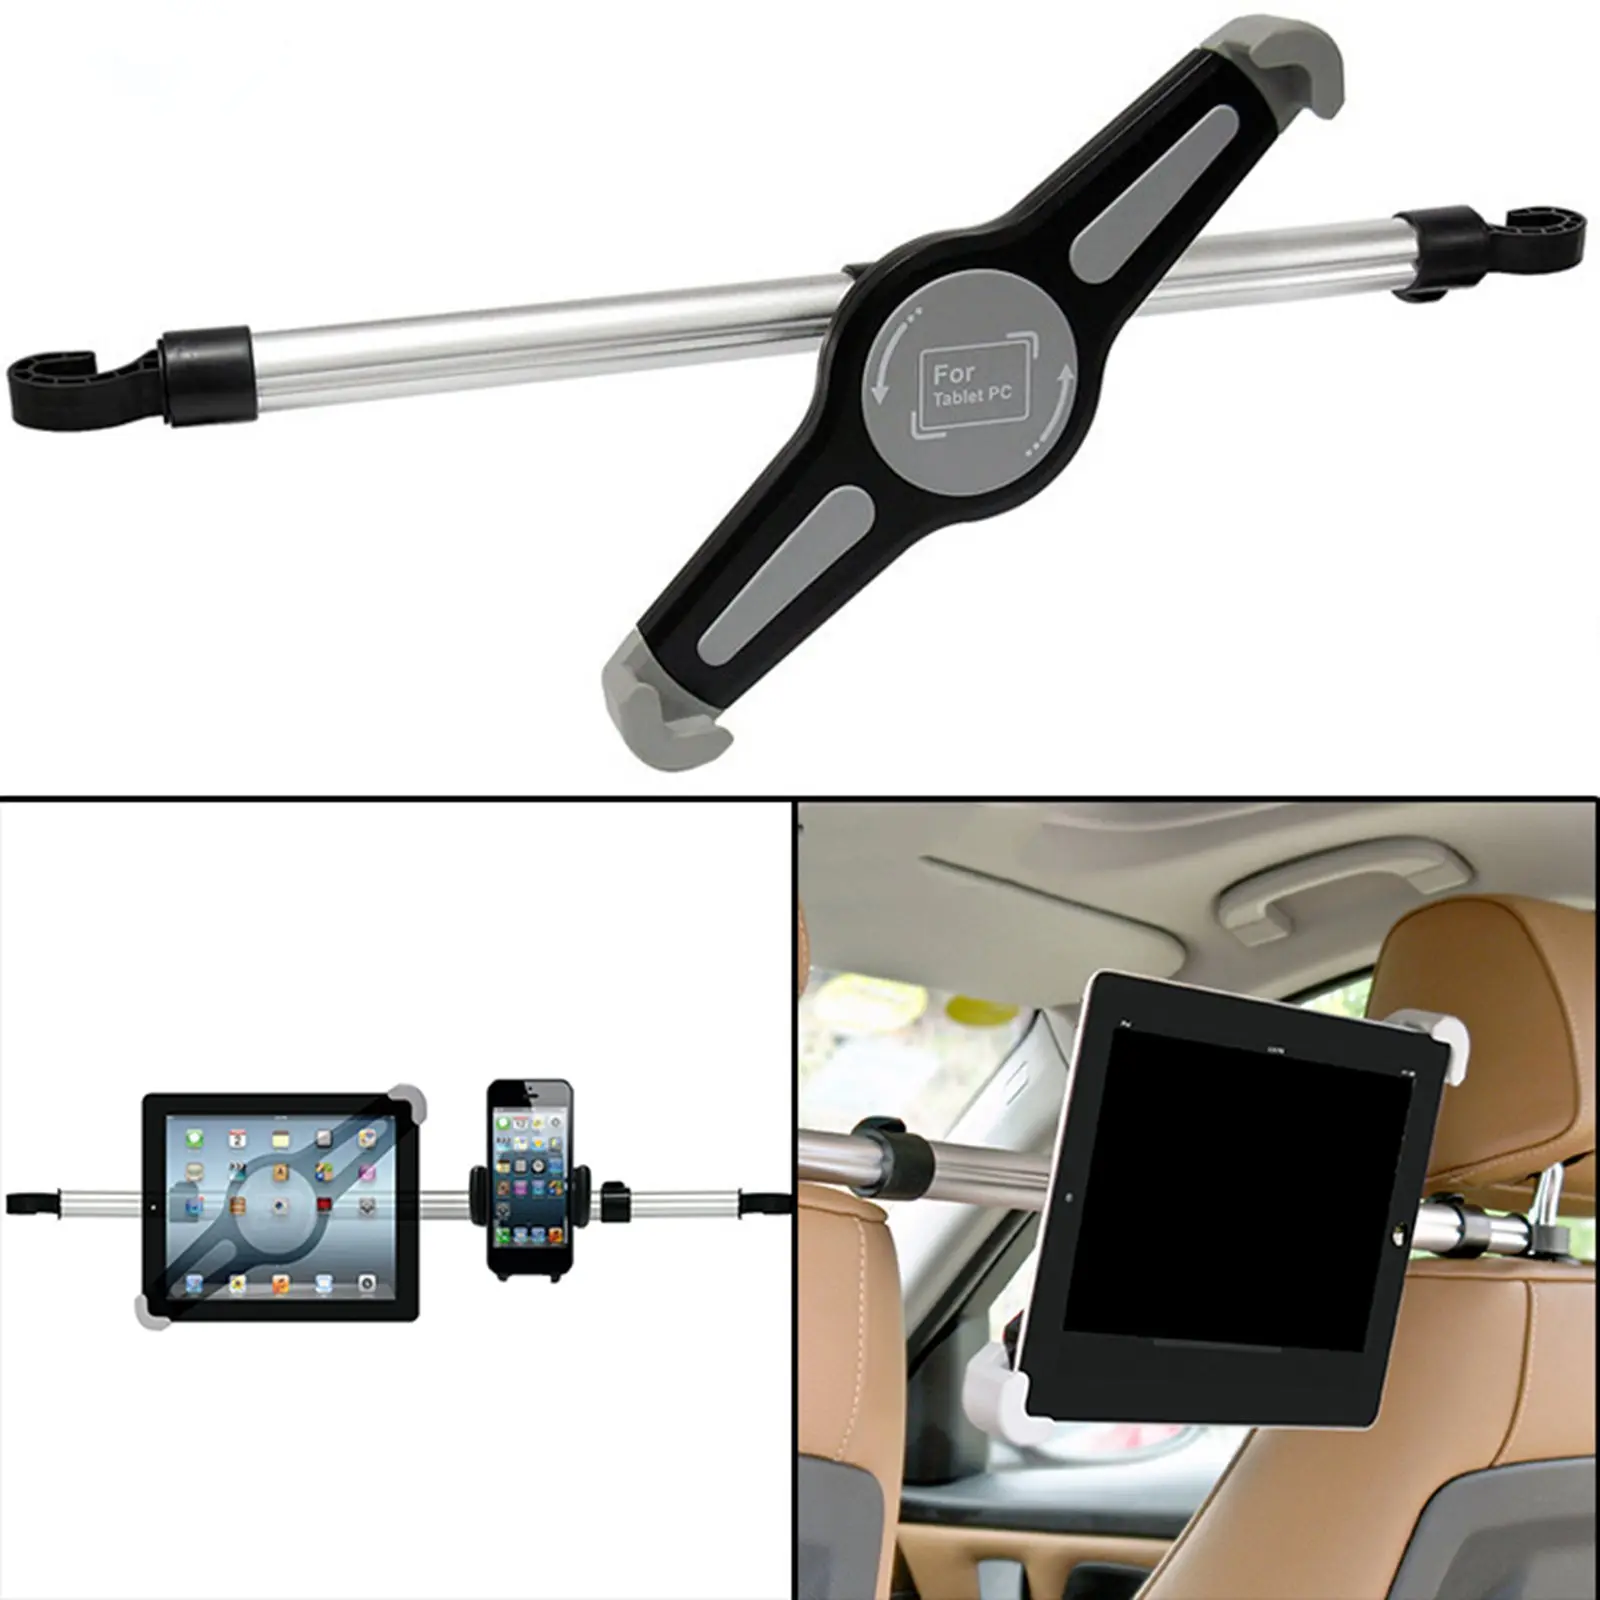 Aluminum Universal Car Headrest Mount Tablet Holder Back Seat 360° Mounts Stand Rubber inside the holder, anti-scratch